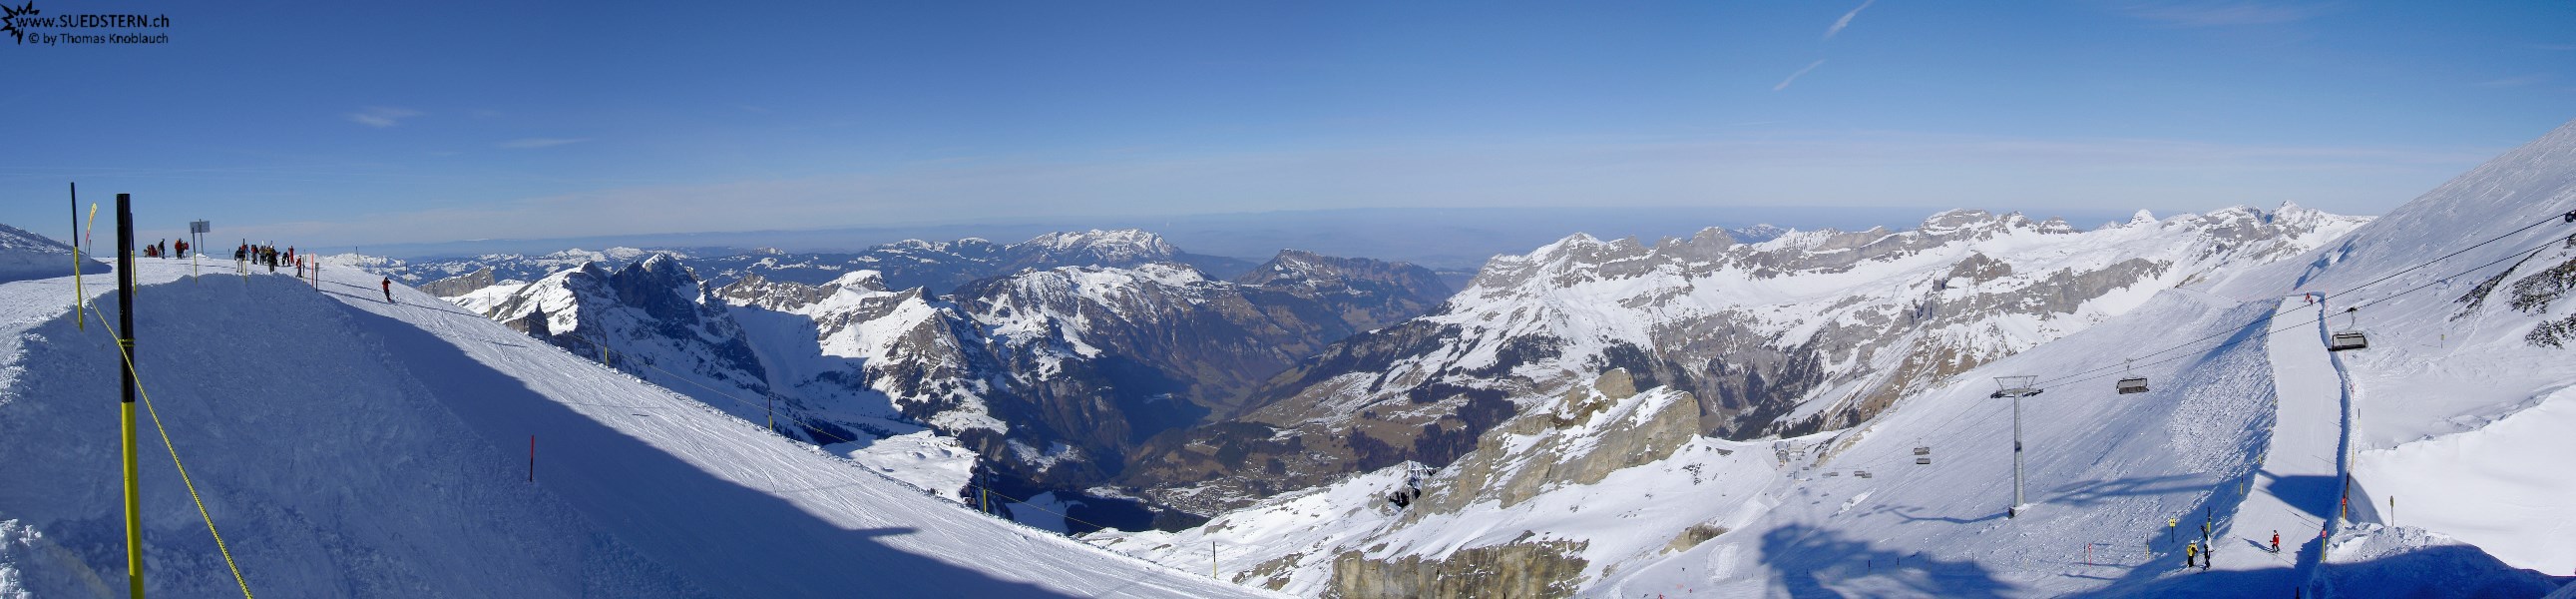 2008-01-29 - Panorama on Titlis direction north, Switzerland